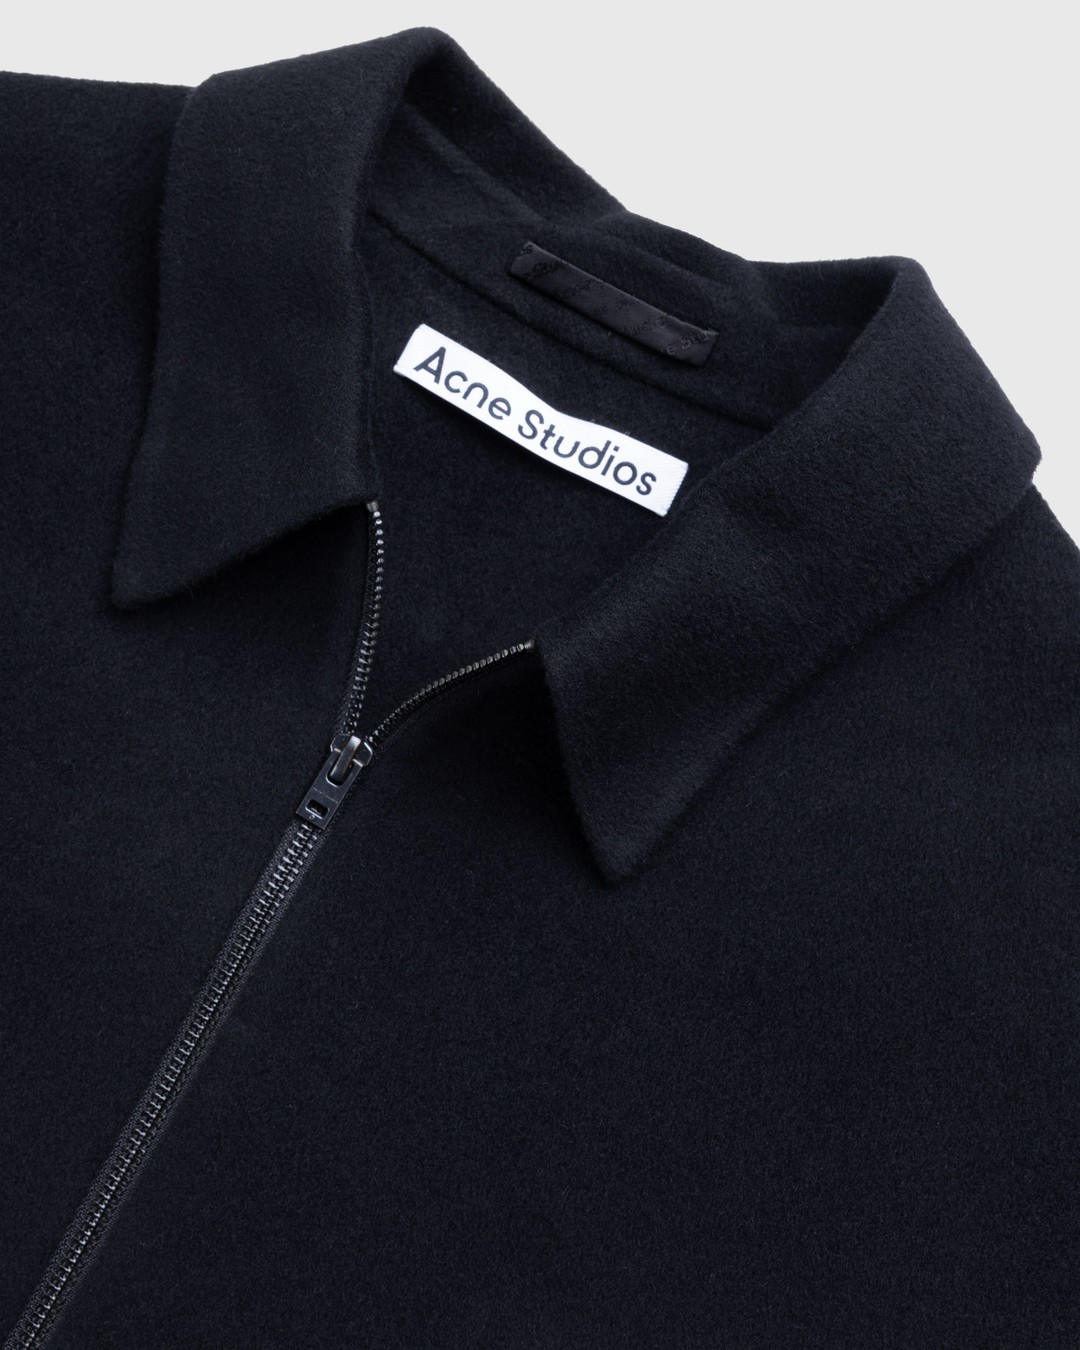 Acne Studios – Wool Zipper Jacket Black - Jackets - Black - Image 5